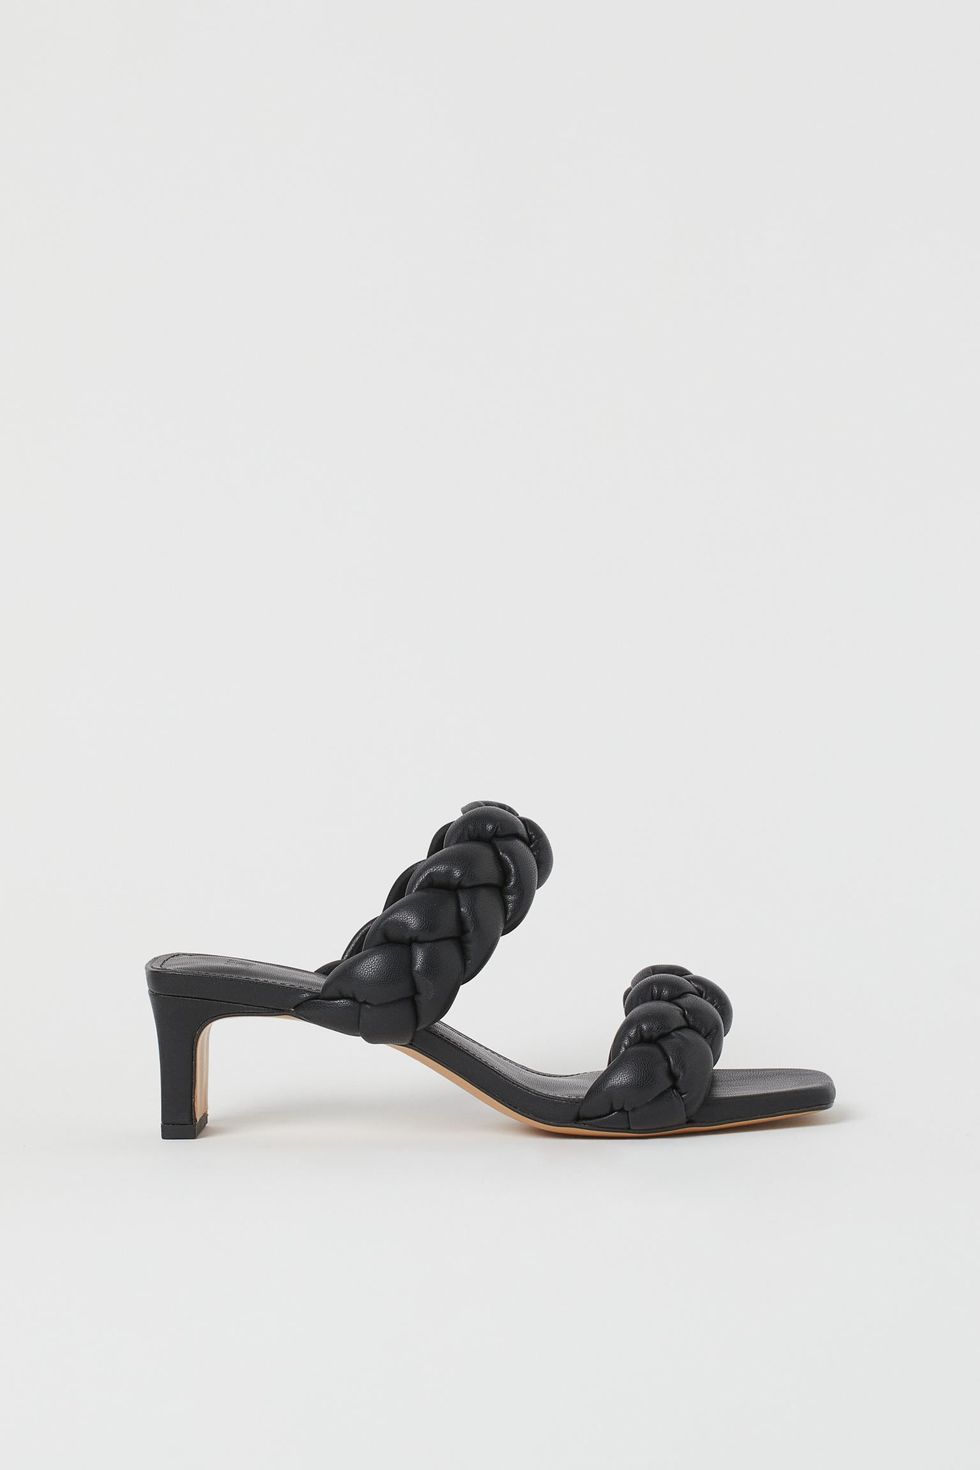 Las sandalias negras de H&M de la directora de ELLE